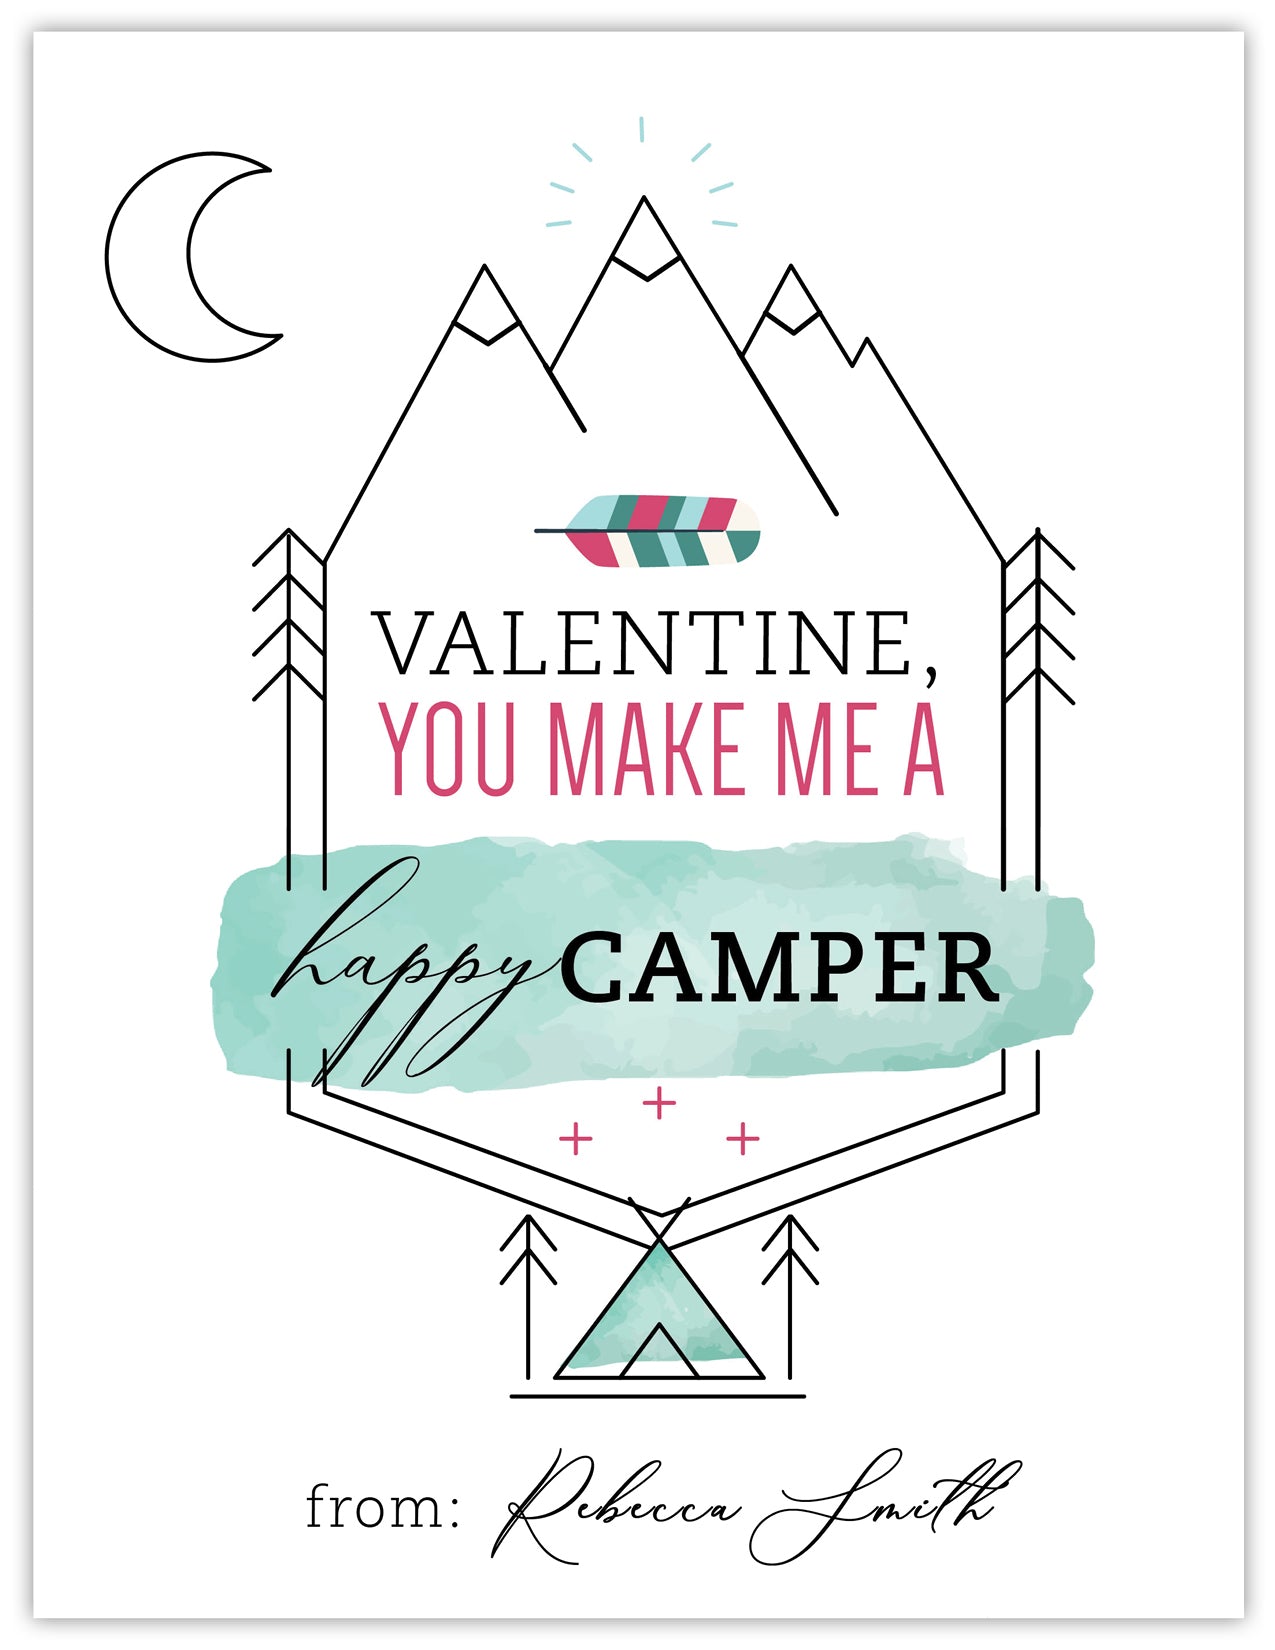 Happy Camper Girl Valentine